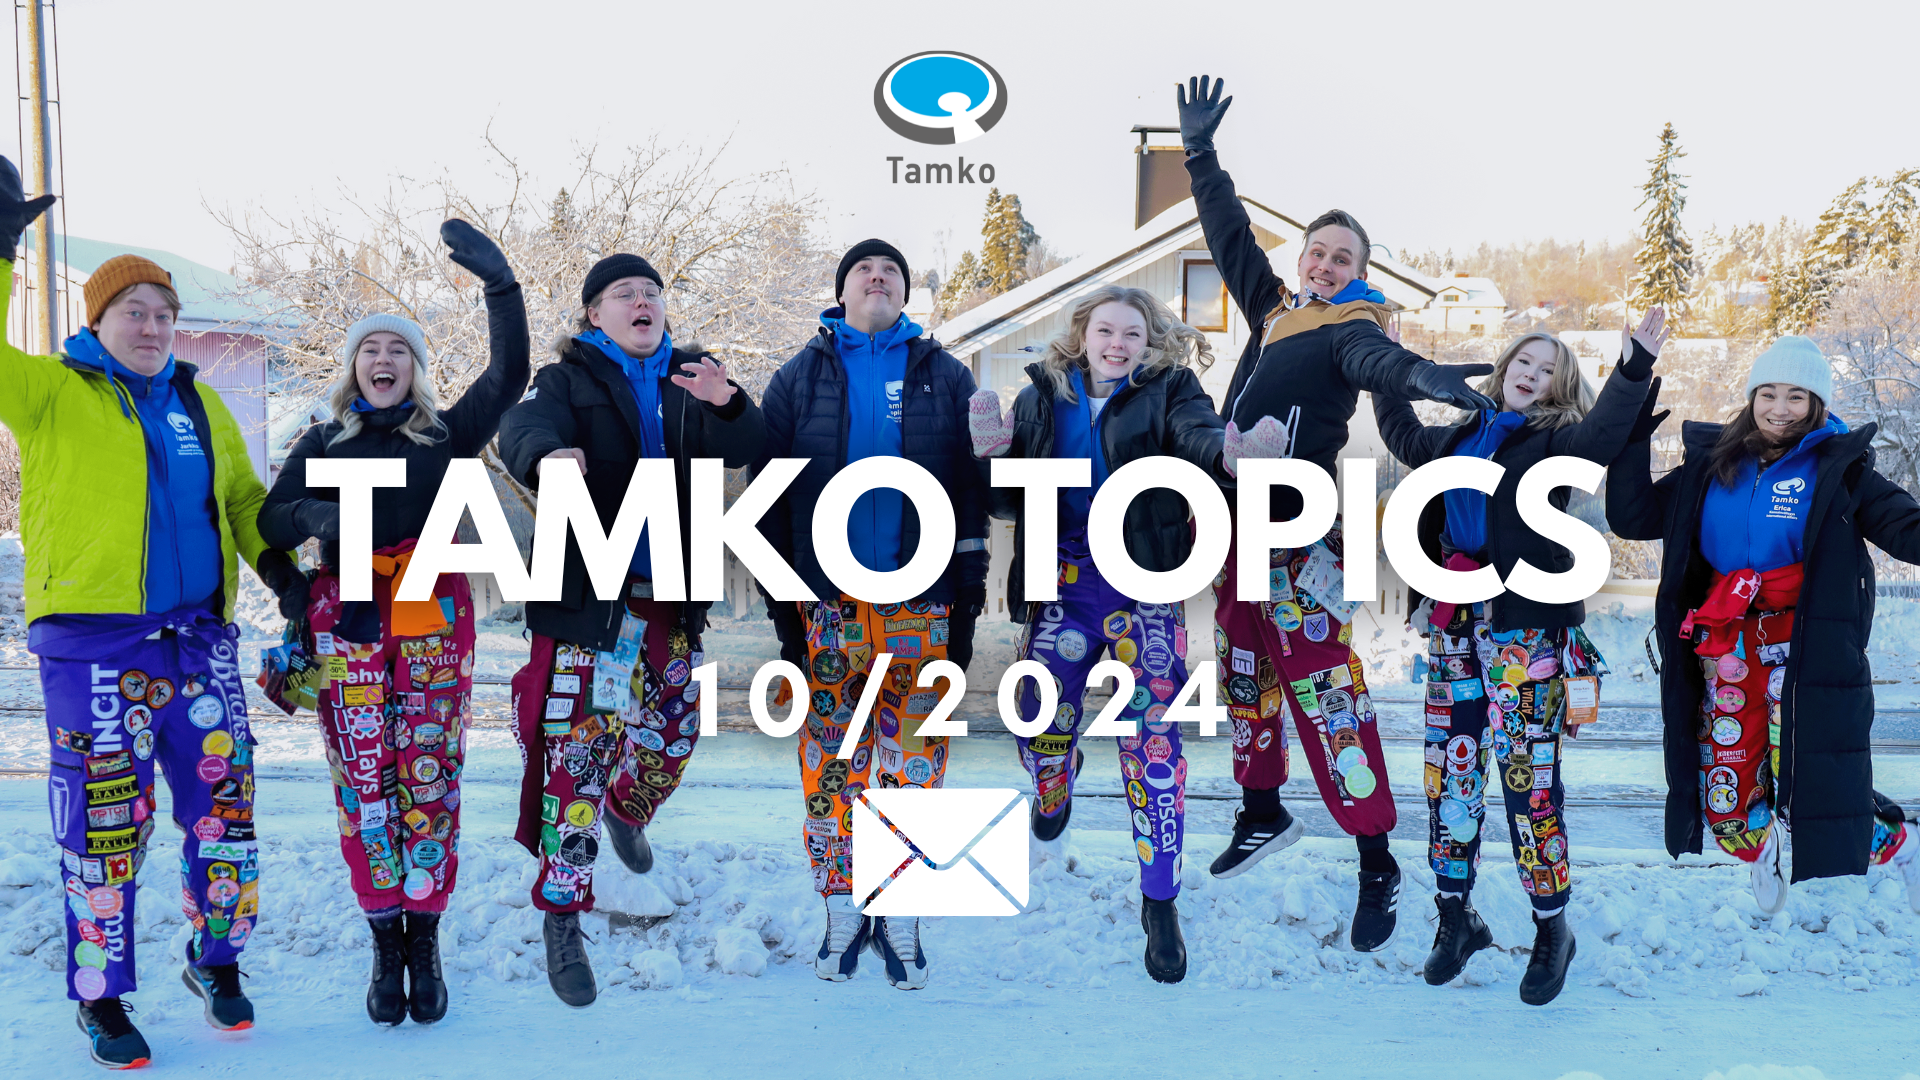 Tamko Topics 10 / 2024